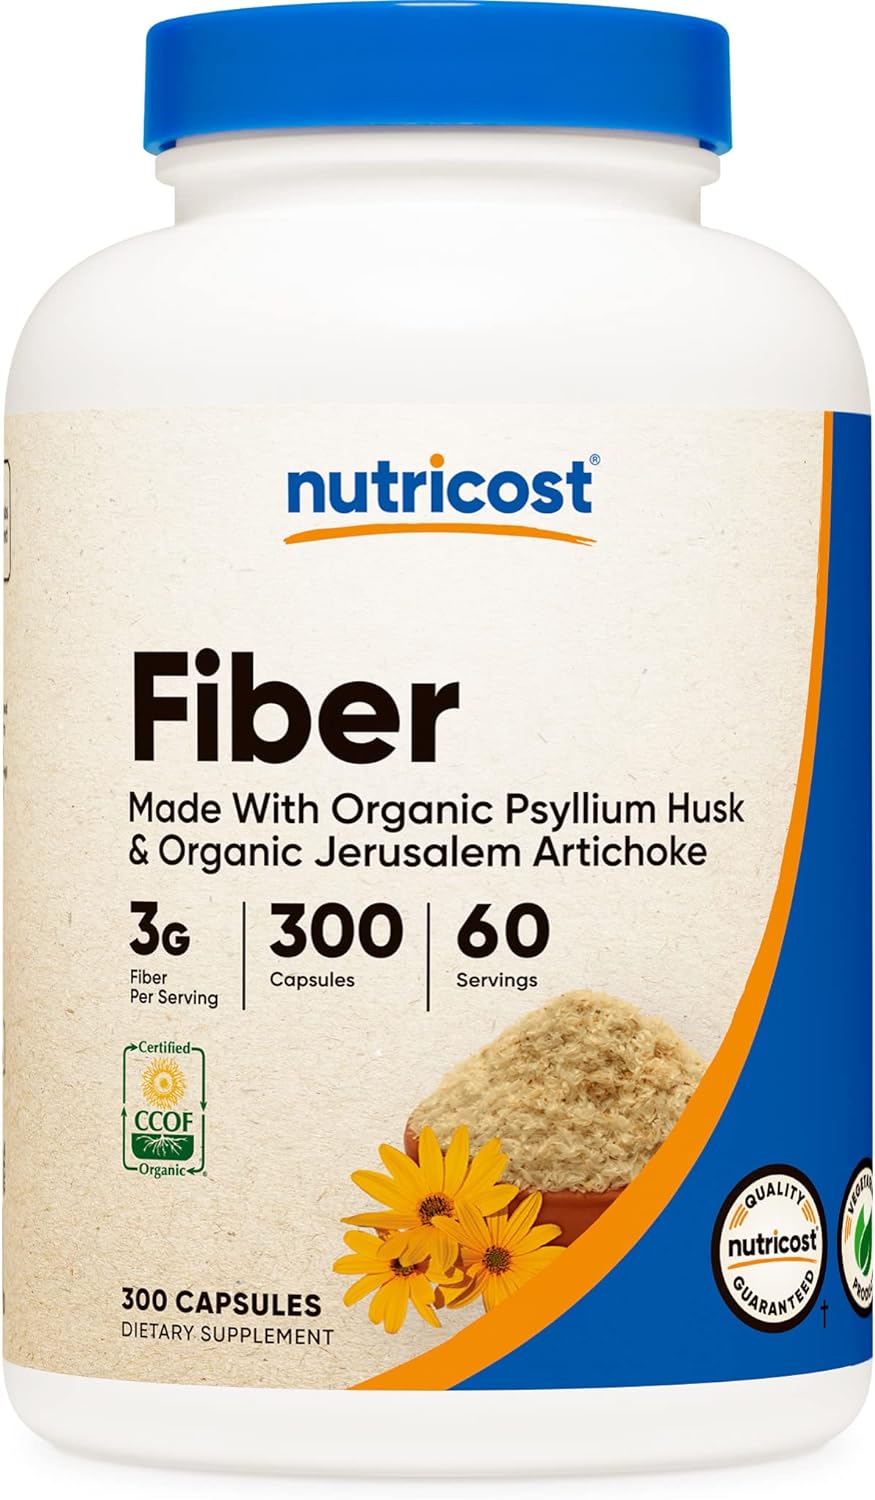 Nutricost Fiber Capsules with Prebiotic Fiber Supplement 300 Capsules - Made with Organic Psyllium Husk & Organic Jerusalem Artichoke, 60 Servings, Gluten Free, 3 G Per Serving